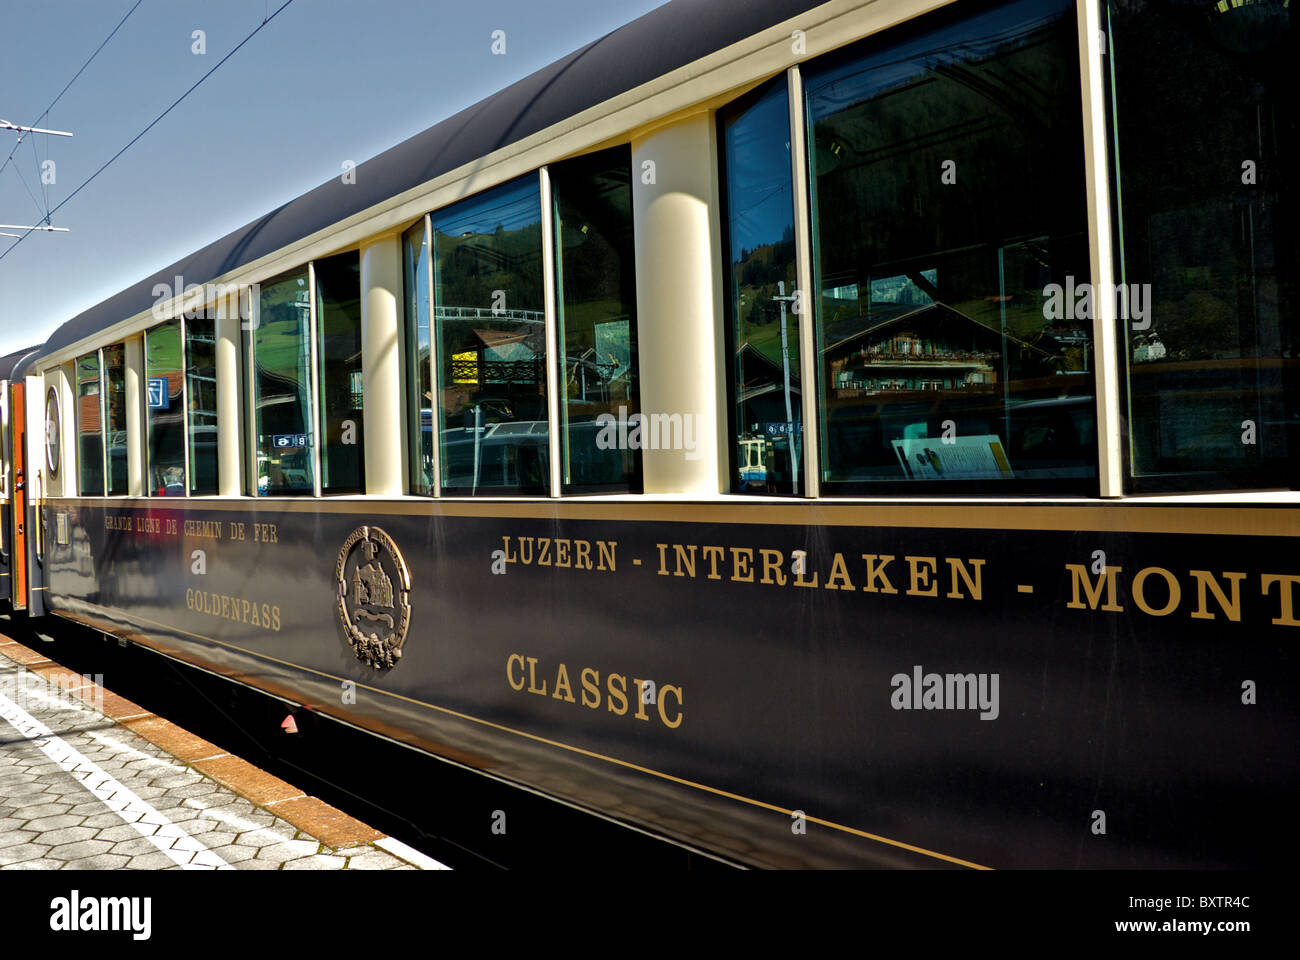 Golden Pass Classic Express train vintage rail car at Montreux Valais Switzerland railway station platform Stock Photo